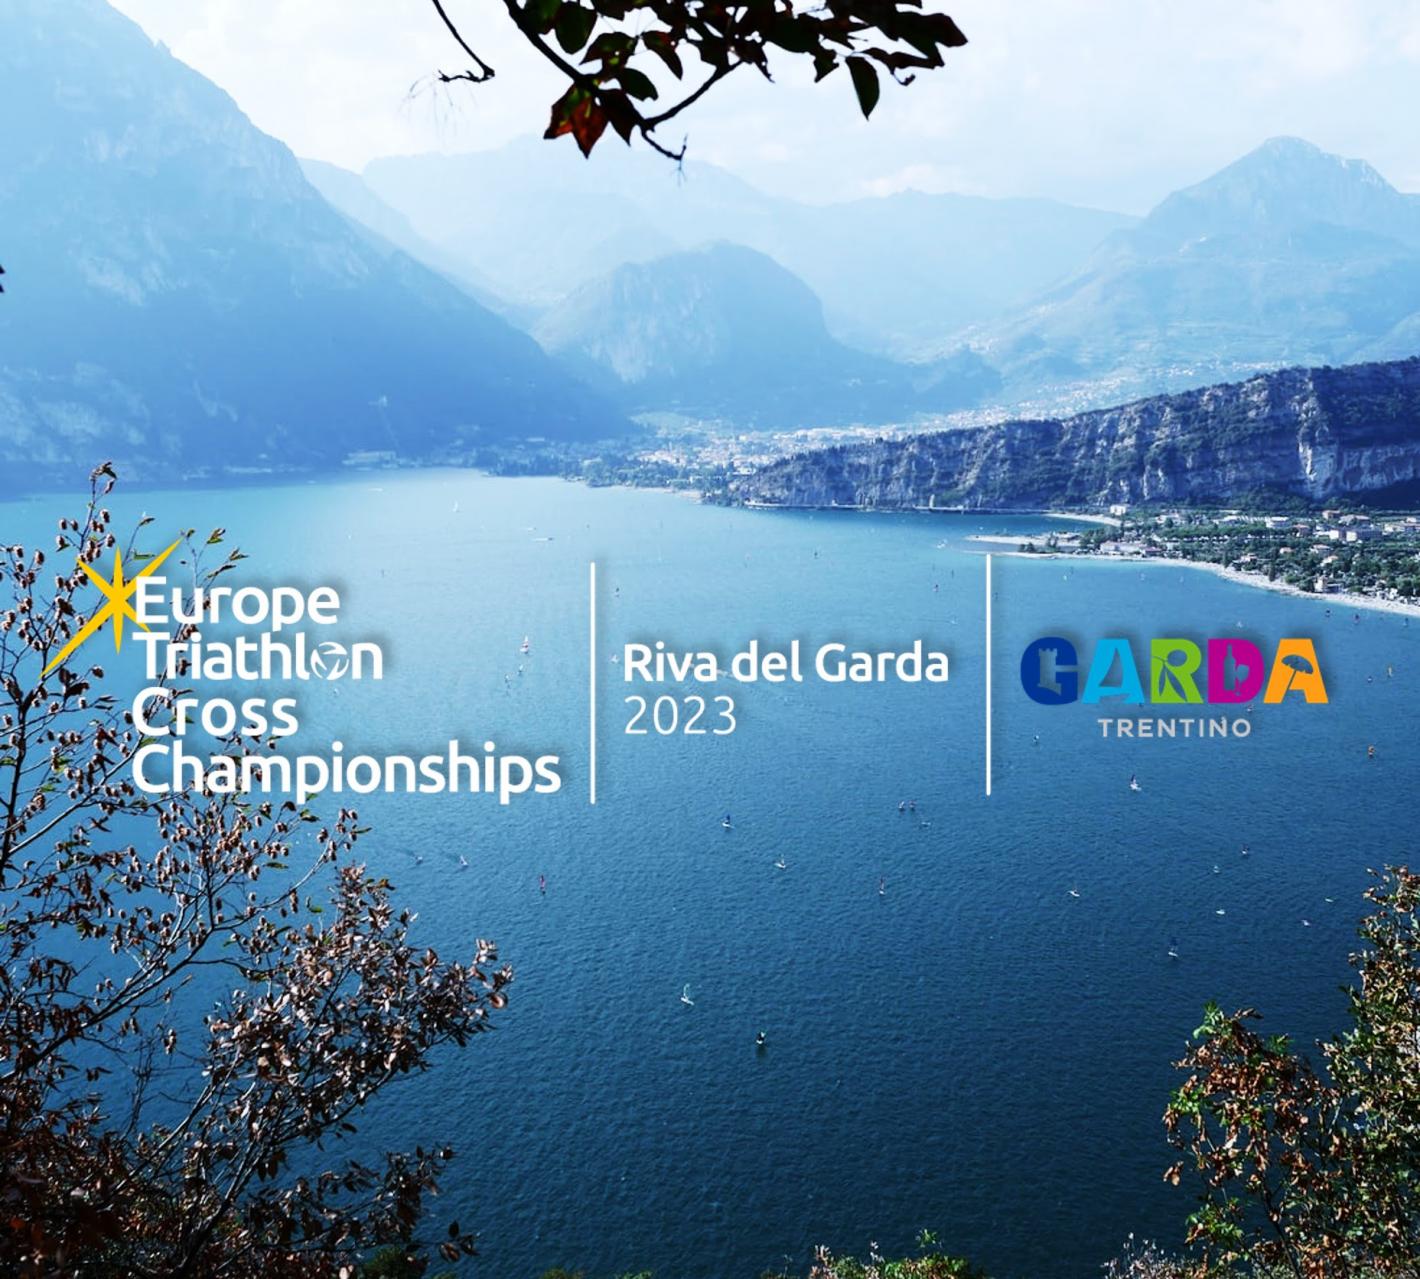 images/2023/Gare_Italia/Europei_Triathlon_Riva_del_Garda/medium/unnamed-2.jpg